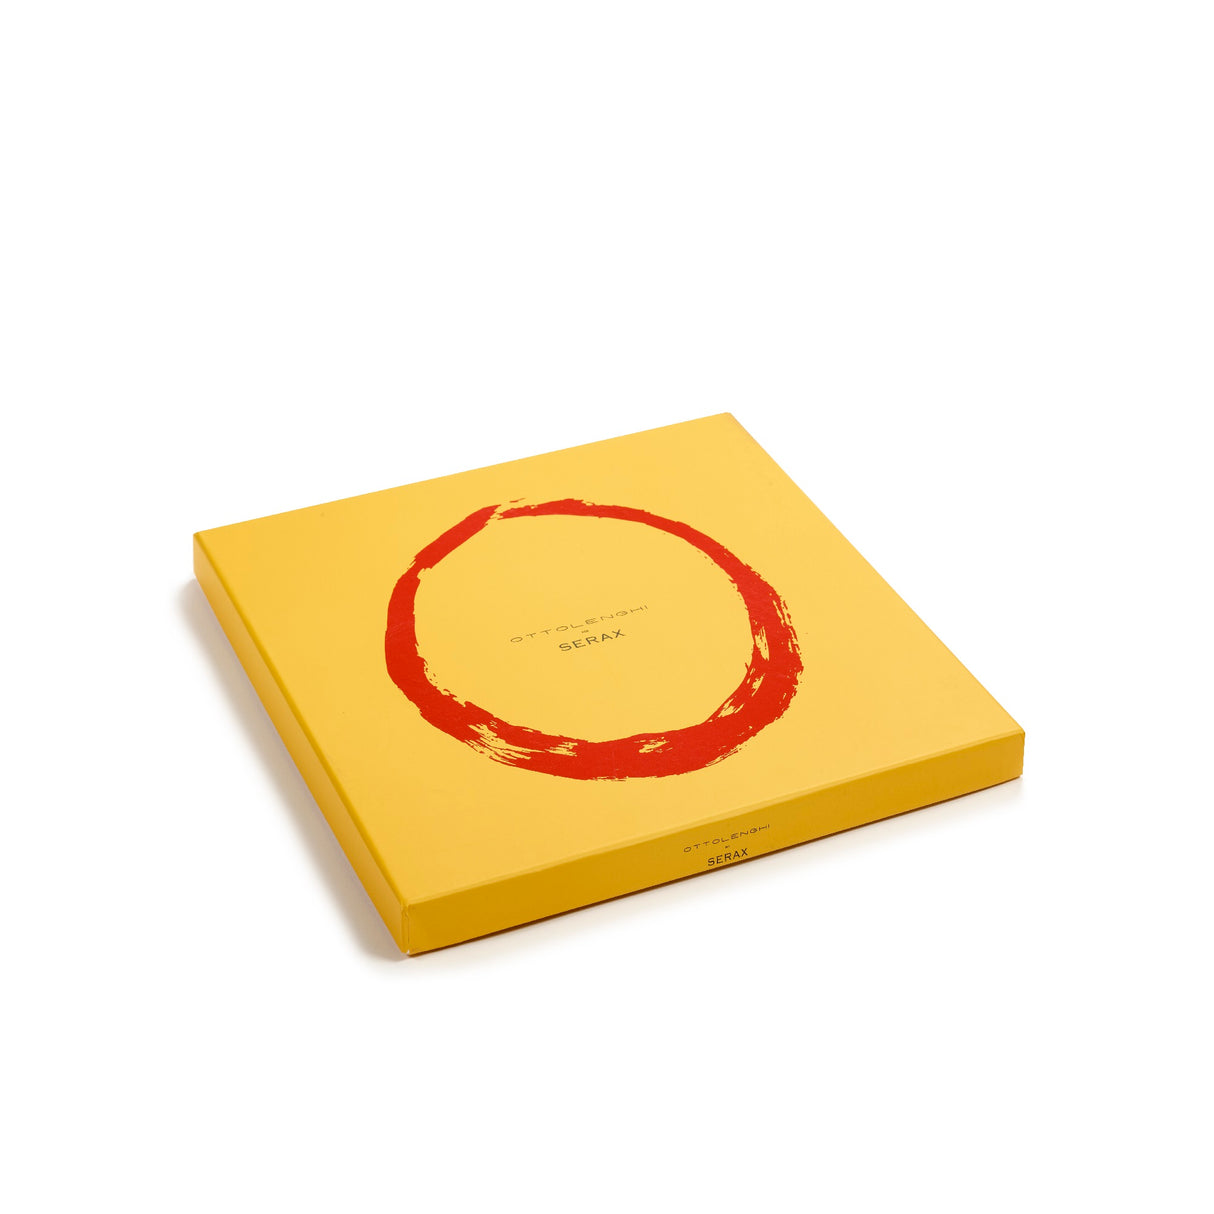 Ottolenghi Servierschüssel Sunny Yellow Swirl-Dots, Gelb-Schwarz, D 35 cm